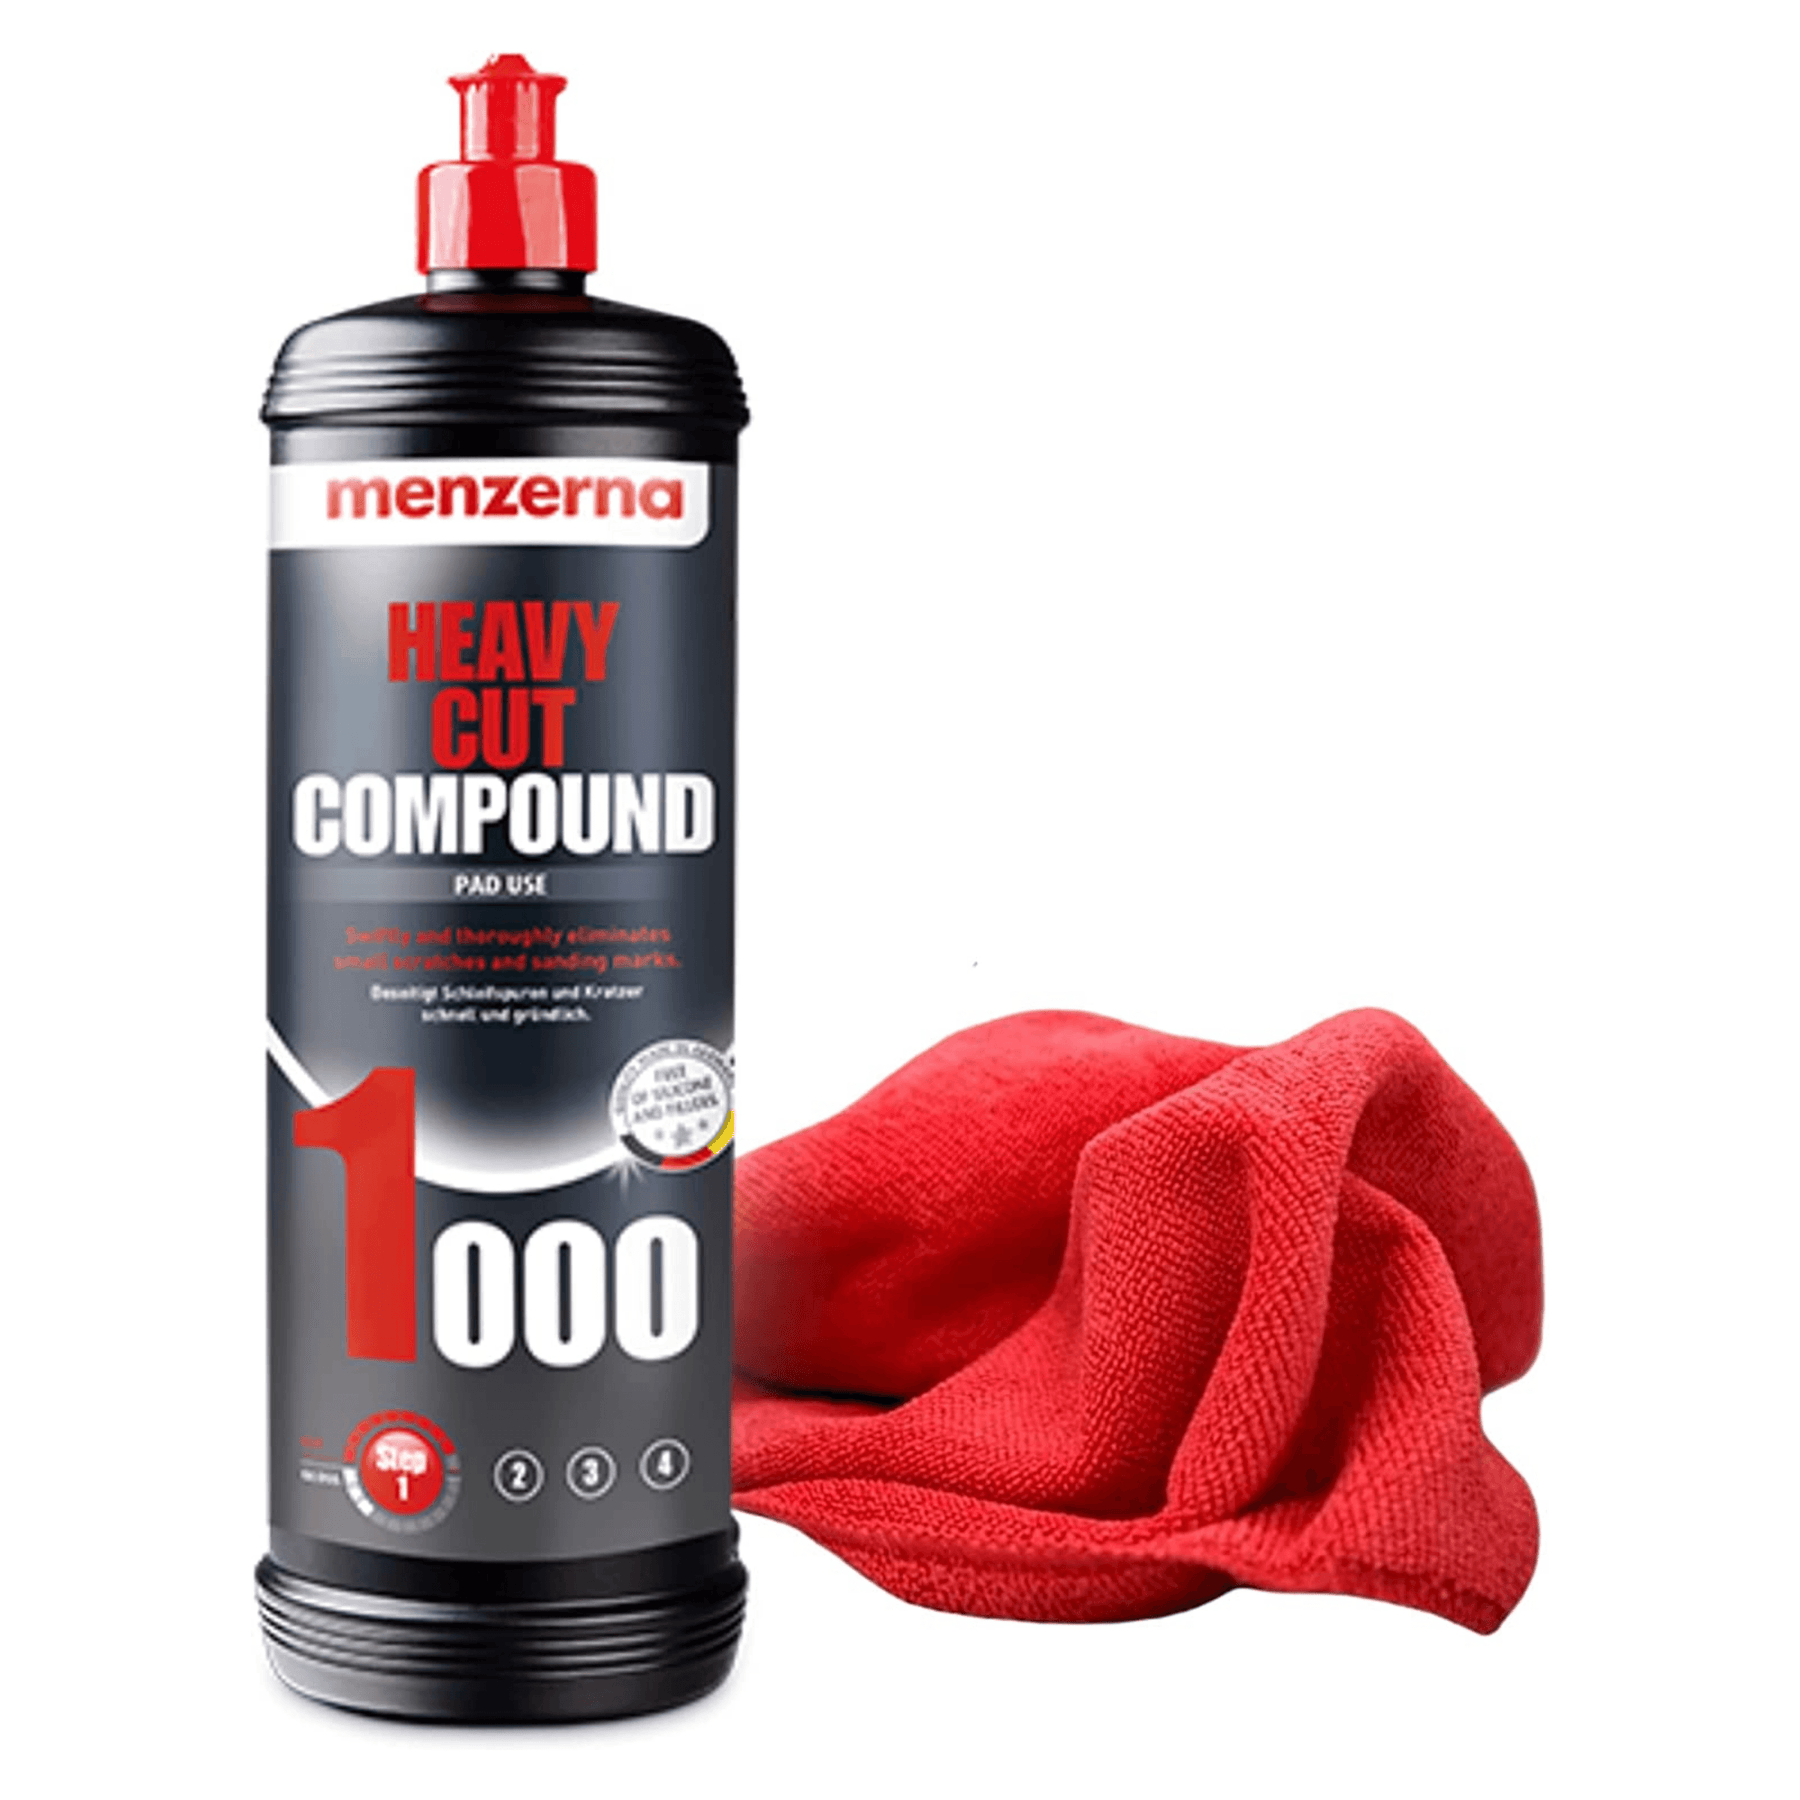 Menzerna Heavy Cut Polishing Compound 1000 with free microfiber towel - Maazzo